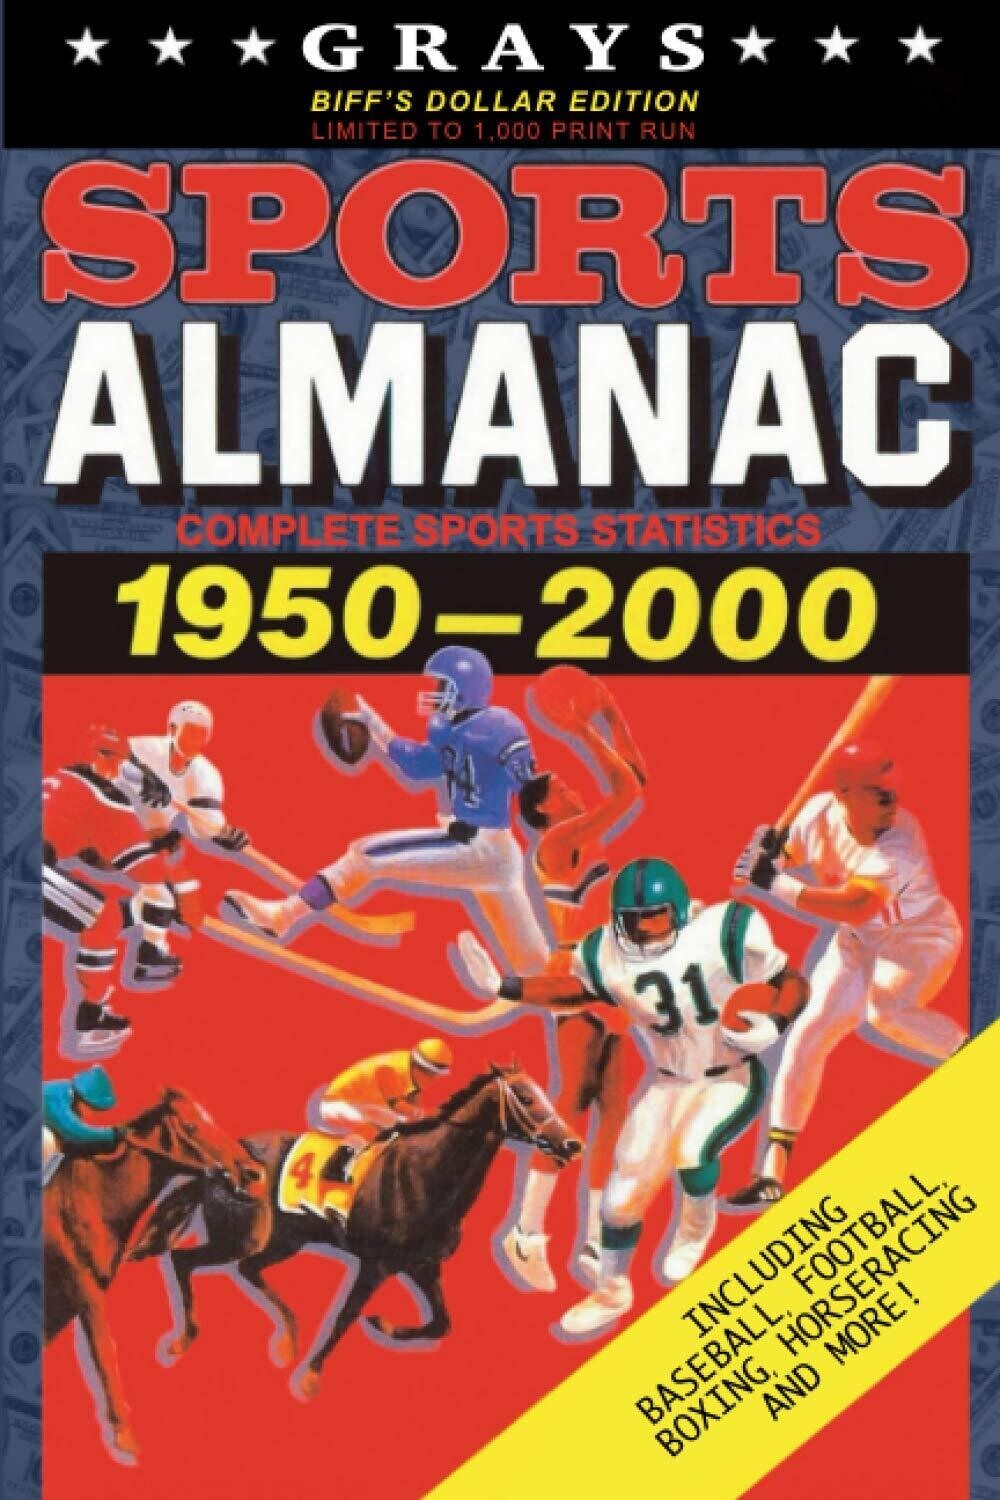 Grays Sports Almanac: Complete Sports Statistics 1950-2000 Book [Biff's Dollar Edition - LIMITED TO 1,000 PRINT RUN]